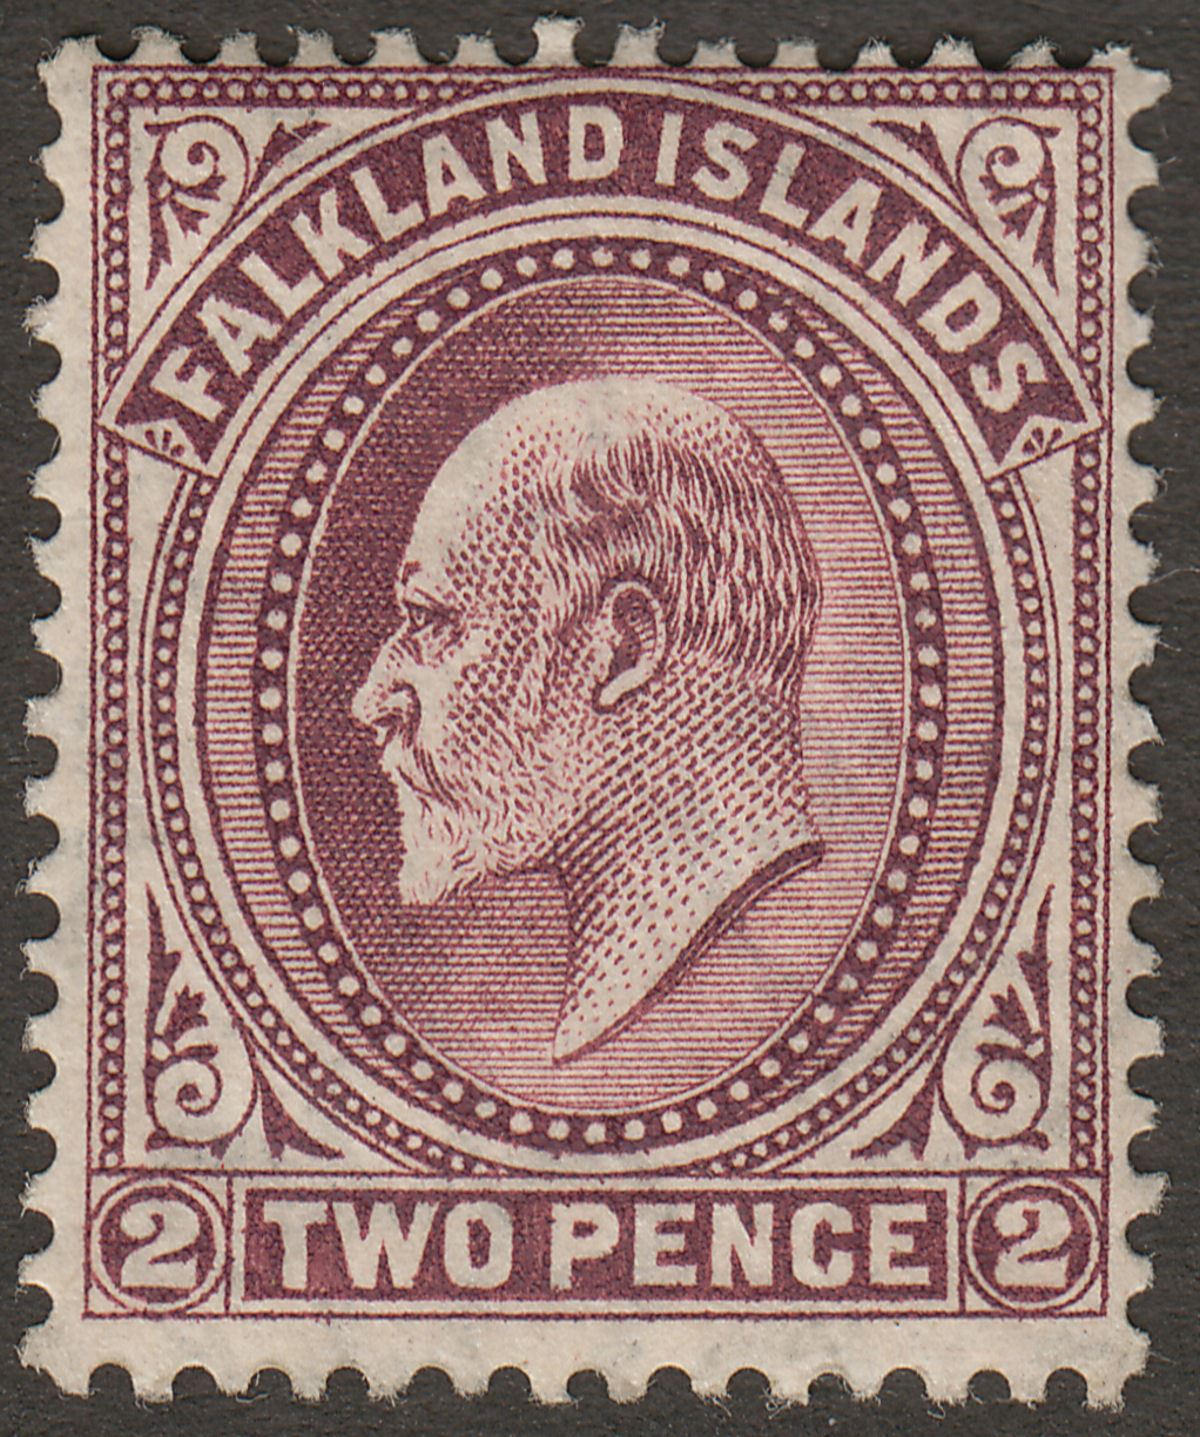 Falkland Islands 1912 KEVII 2d Reddish Purple Mint SG45b cat £225 with BPA Cert